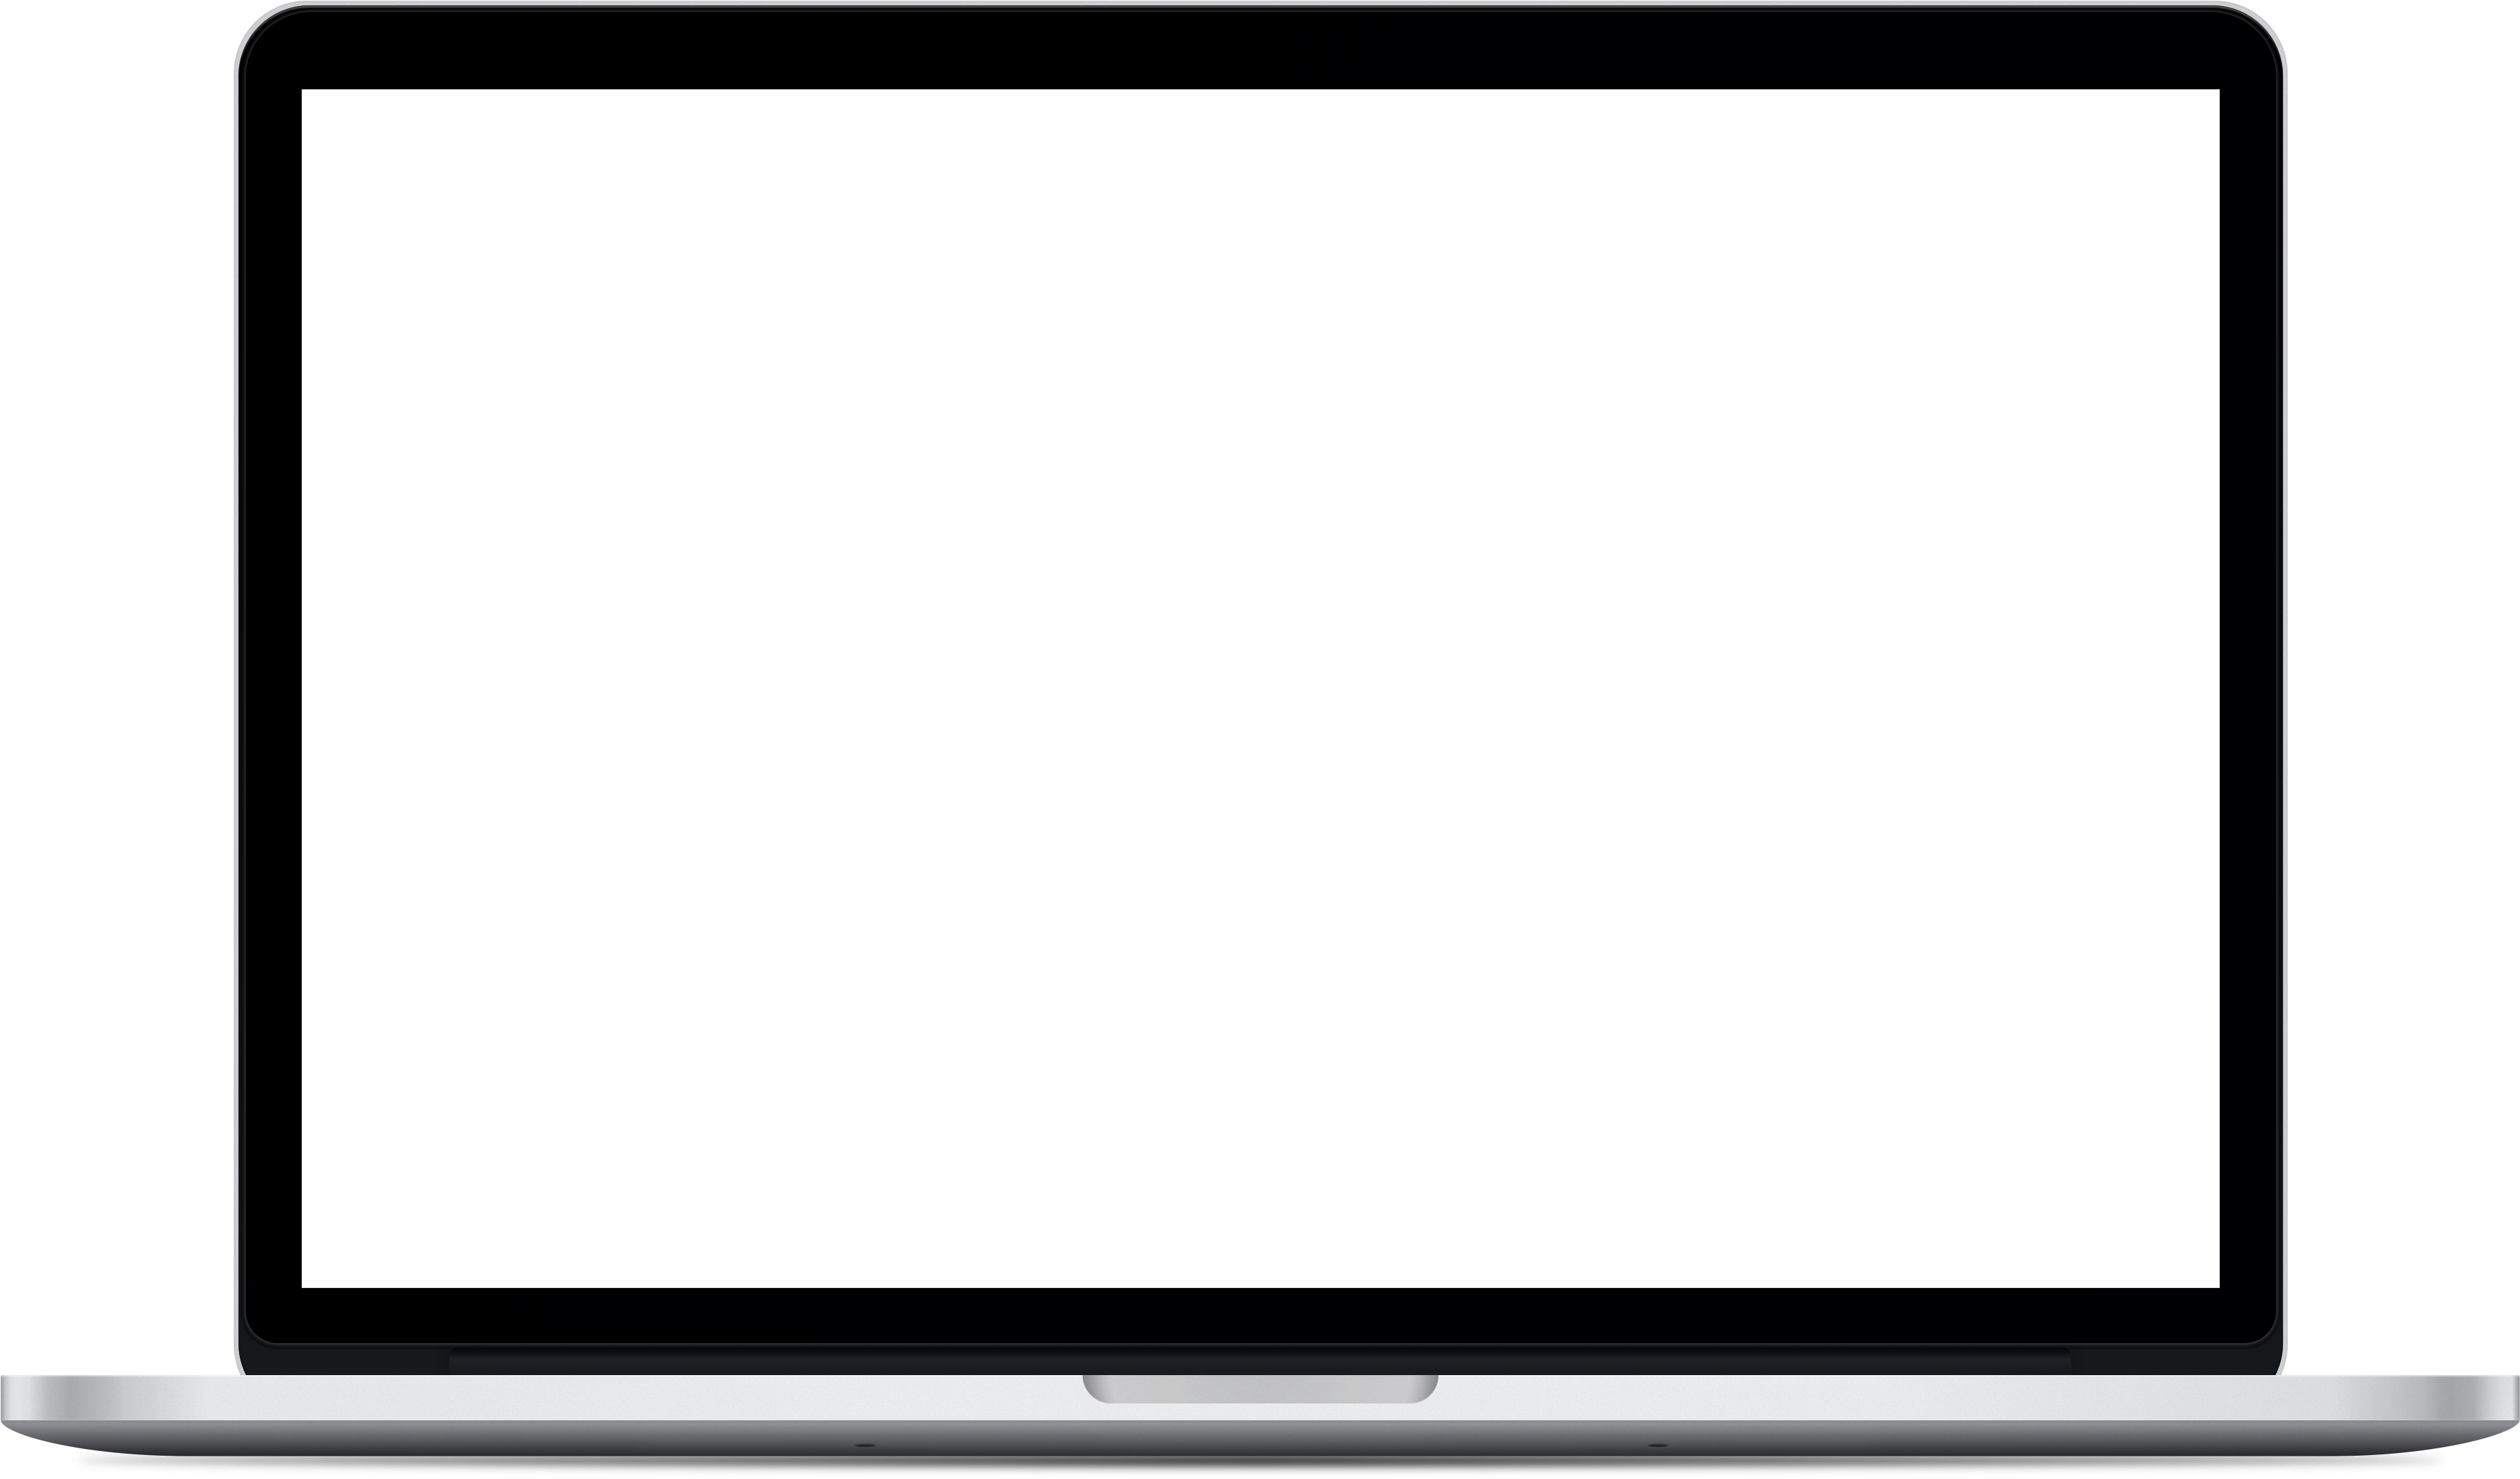 Рамки вокруг экрана. Макбук без фона. Ноутбук с пустым экраном. Ноутбук с прозрачным экраном. Экран ноутбука без фона.